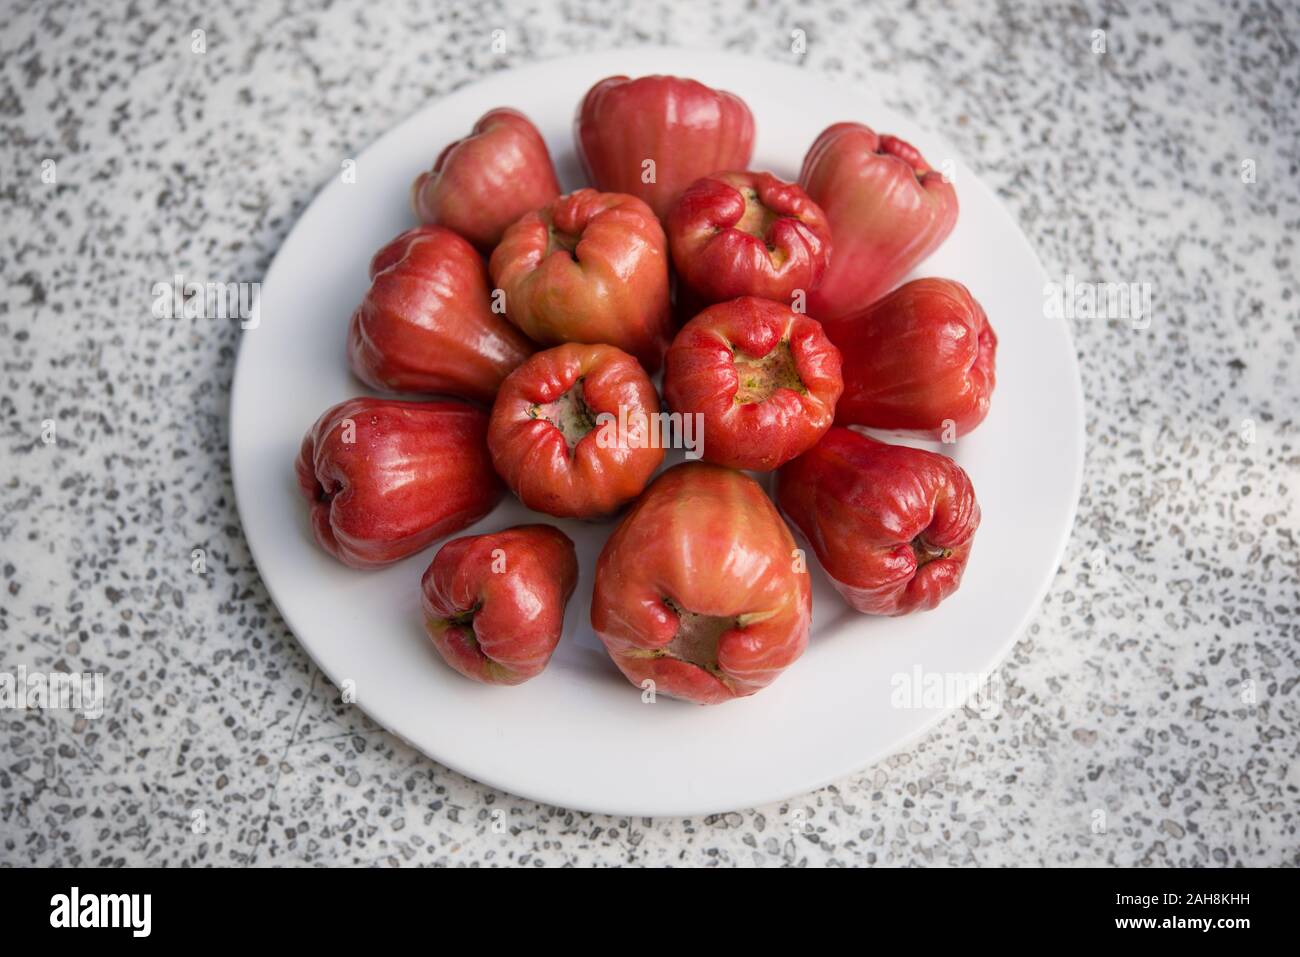 Wax apples (Syzygium samarangense) on a plate. Aka Java apple, rose apple, wax jambu. A tropical fruit popular in Southeast Asia. Stock Photo